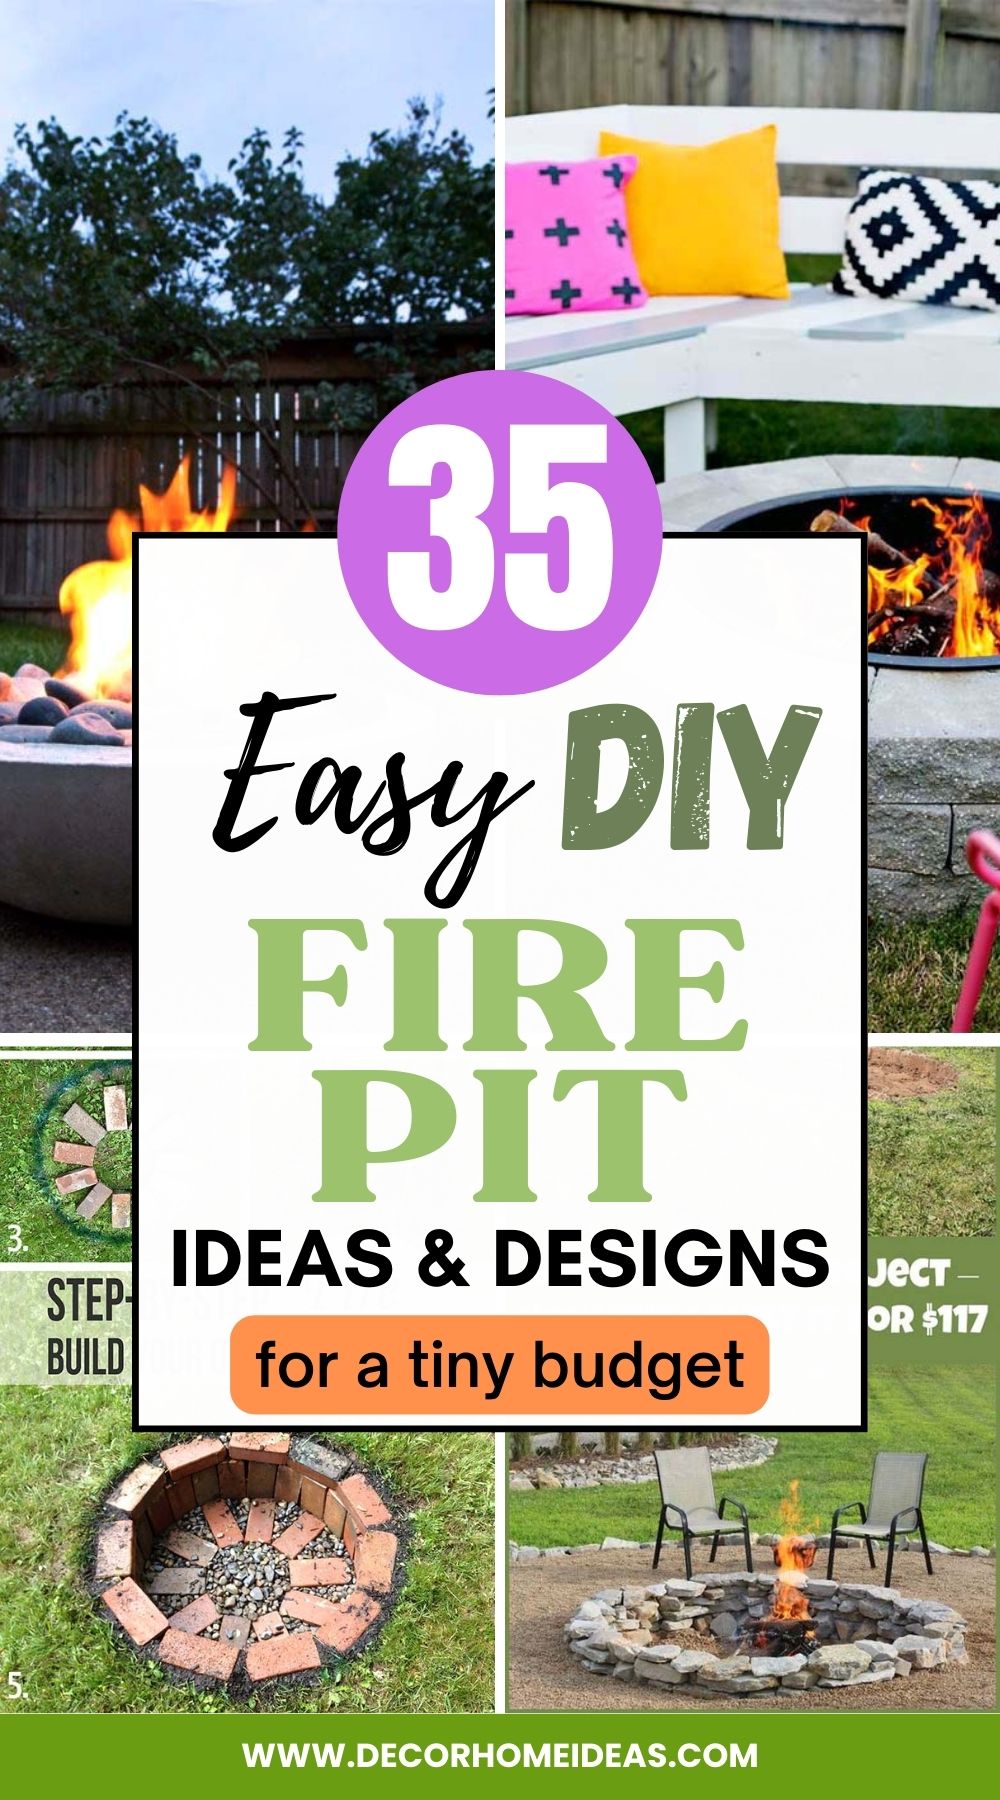 Easy Fire Pit Ideas